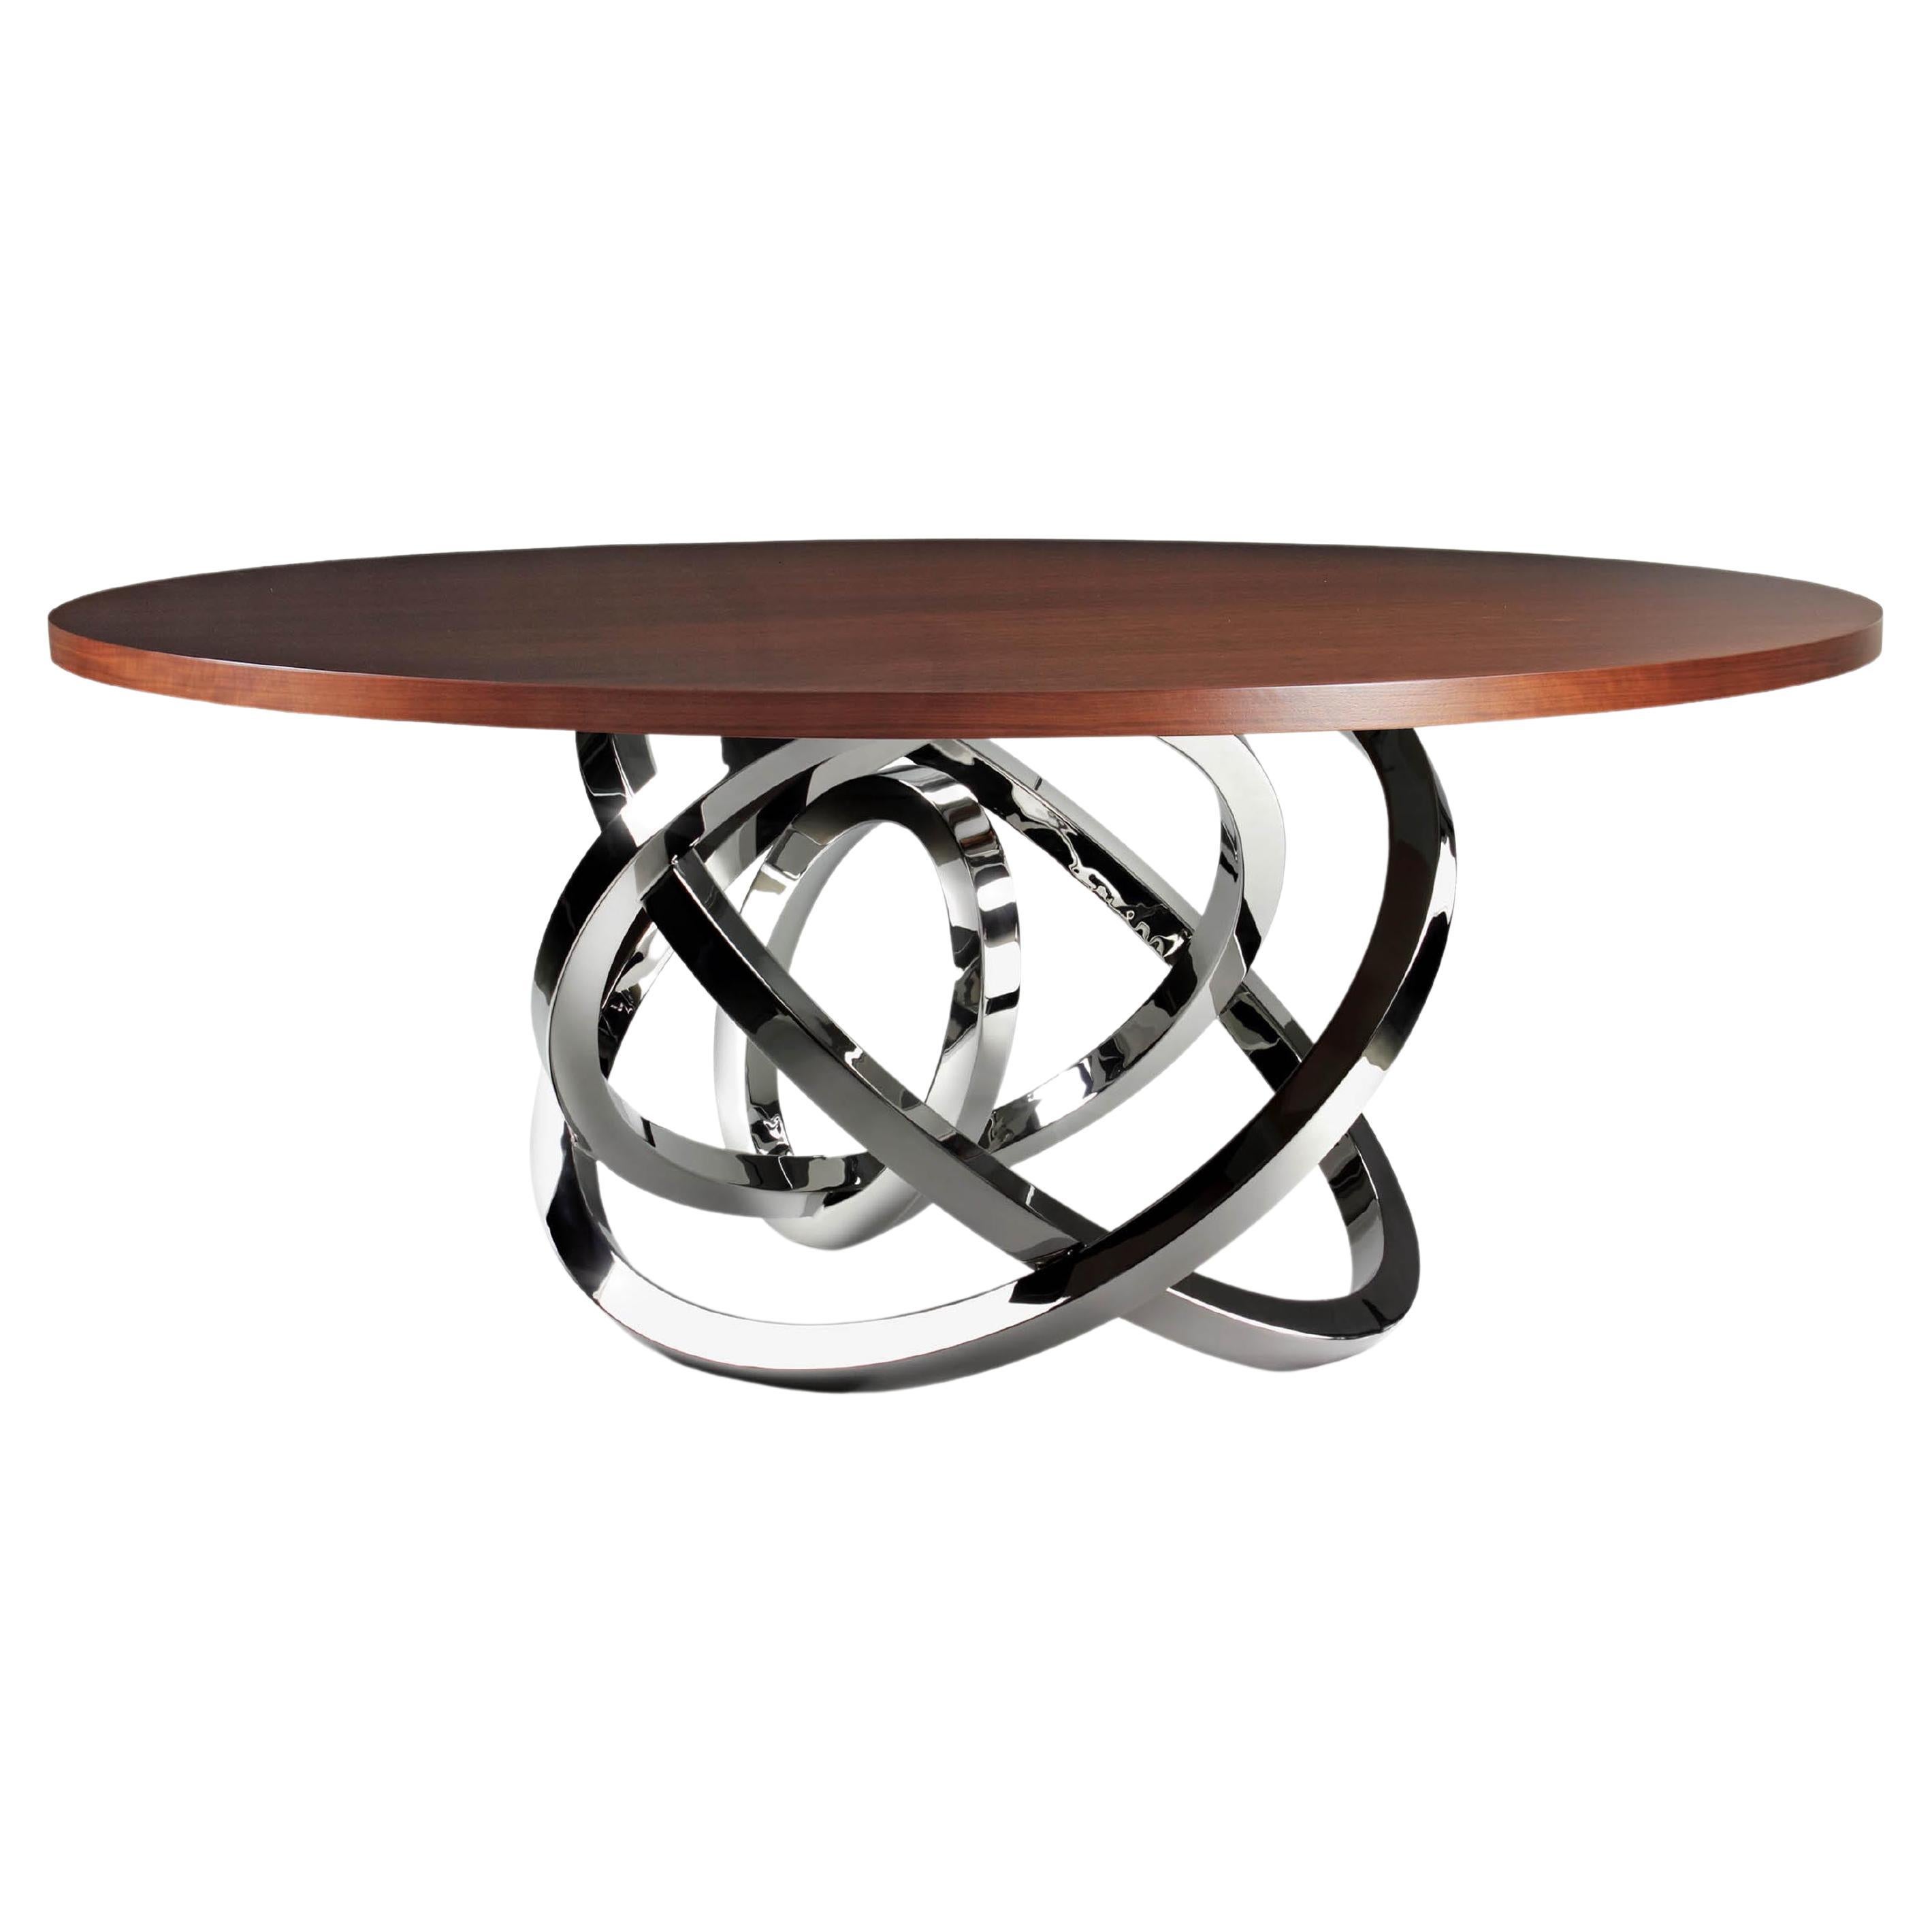 Dining Table Circular Mirror Steel Base Walnut Wood Collectible Handmade, Italy